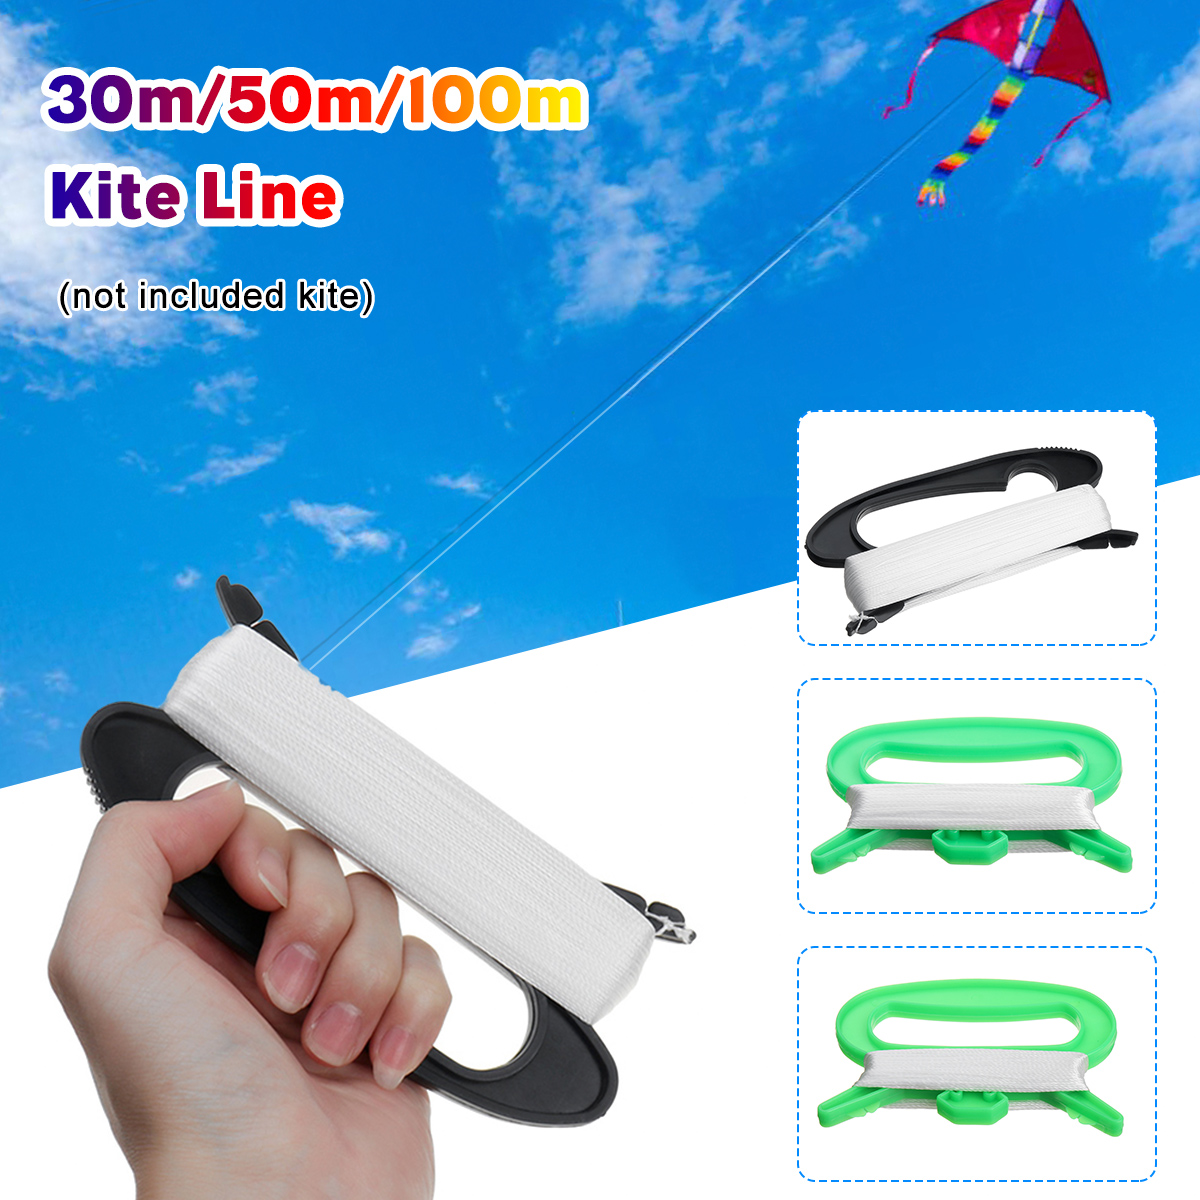 30m50m100m-Flying-Kite-Line-String-With-Winder-Handle-For-KidsAdult-1691787-1